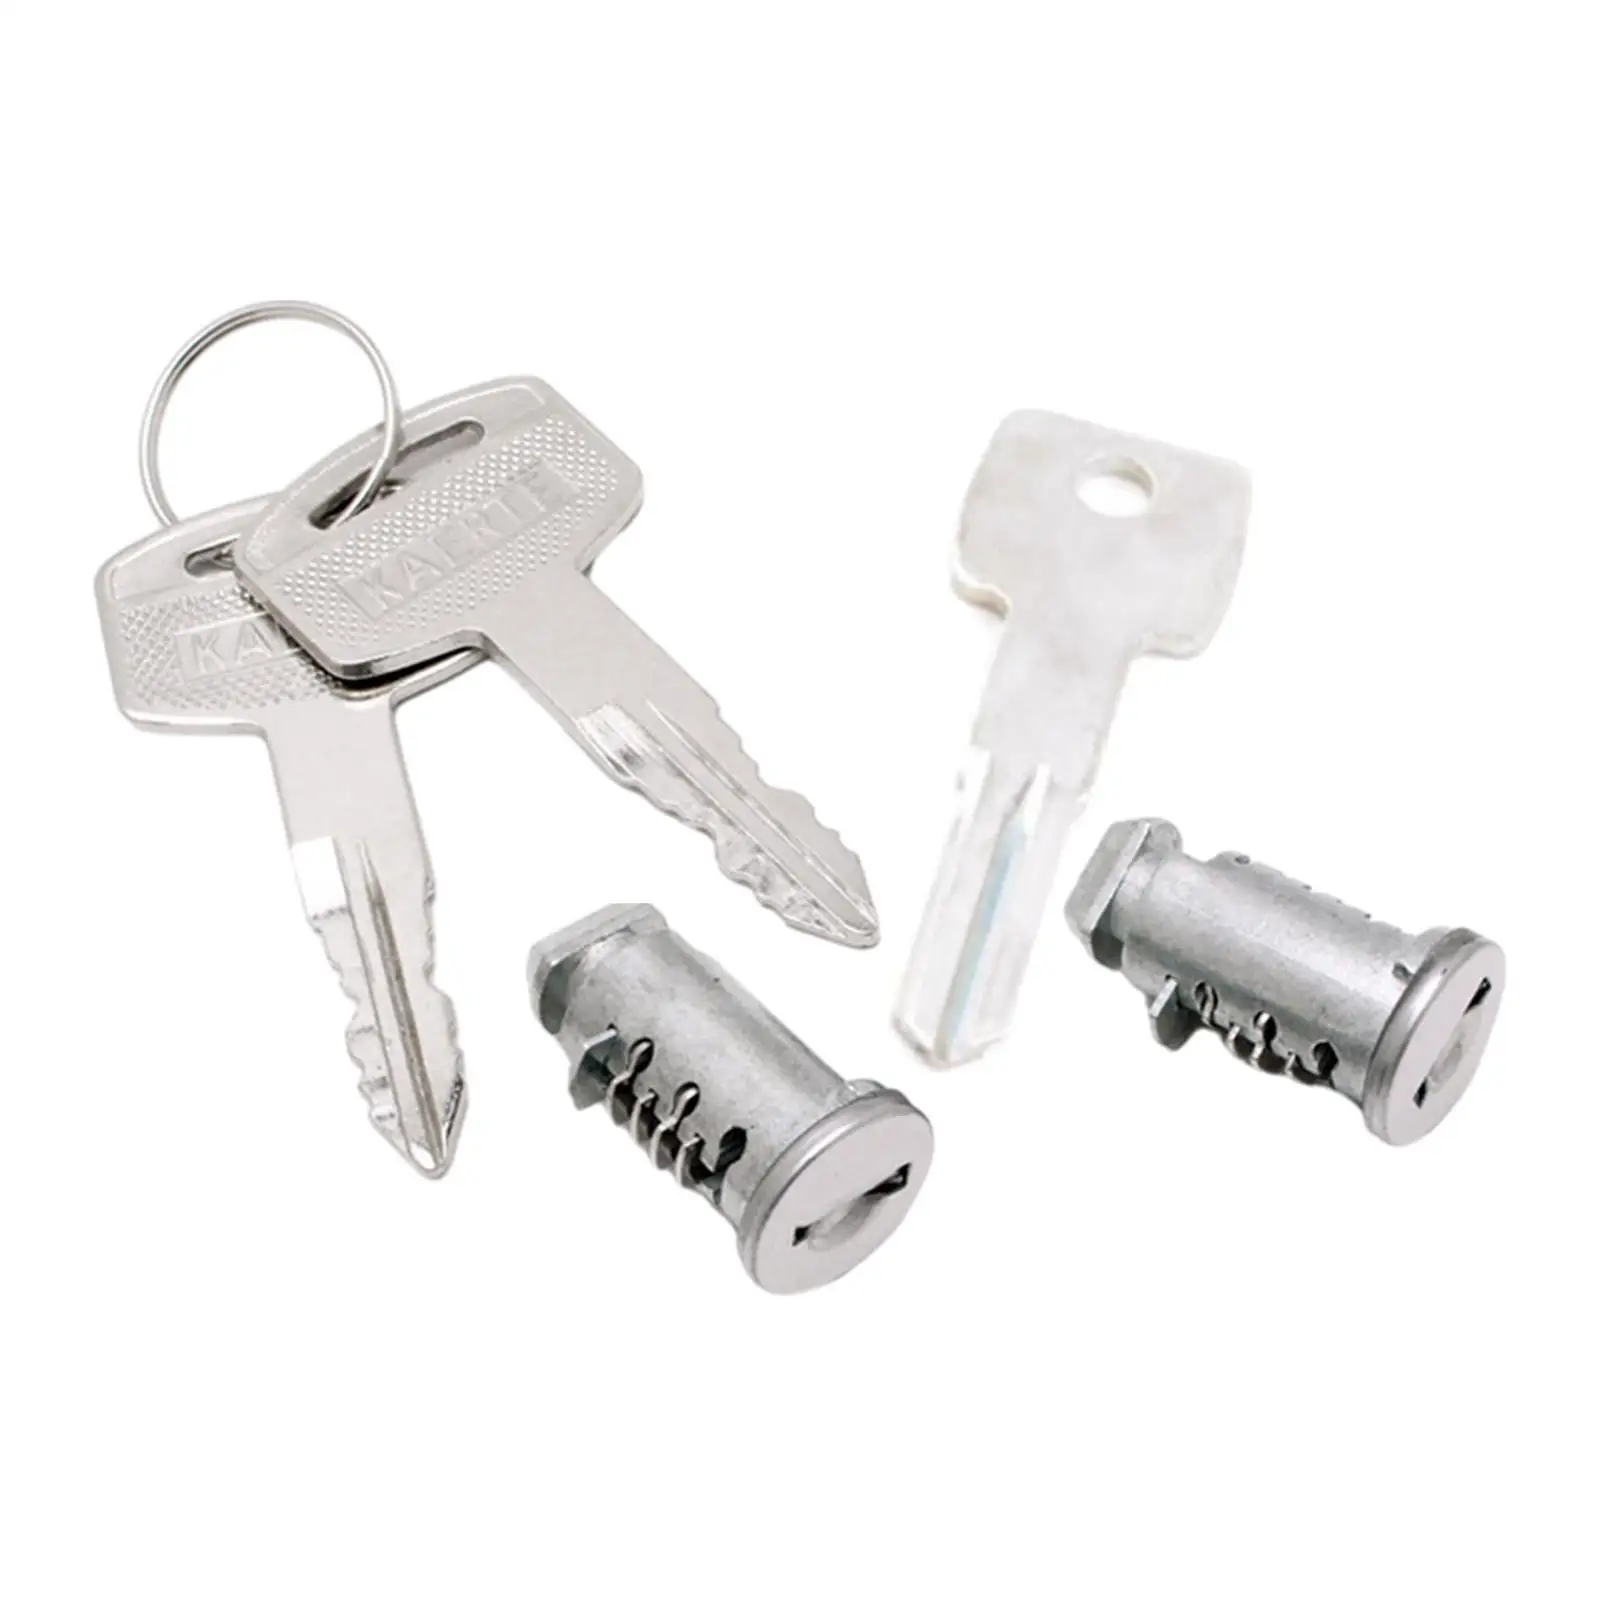 2 Pieces Lock Cylindes Lock Cores Detachable Cargo, Bar Lock with Key Cross Bars Locks and Key Kit for Car Rack Locks SUV